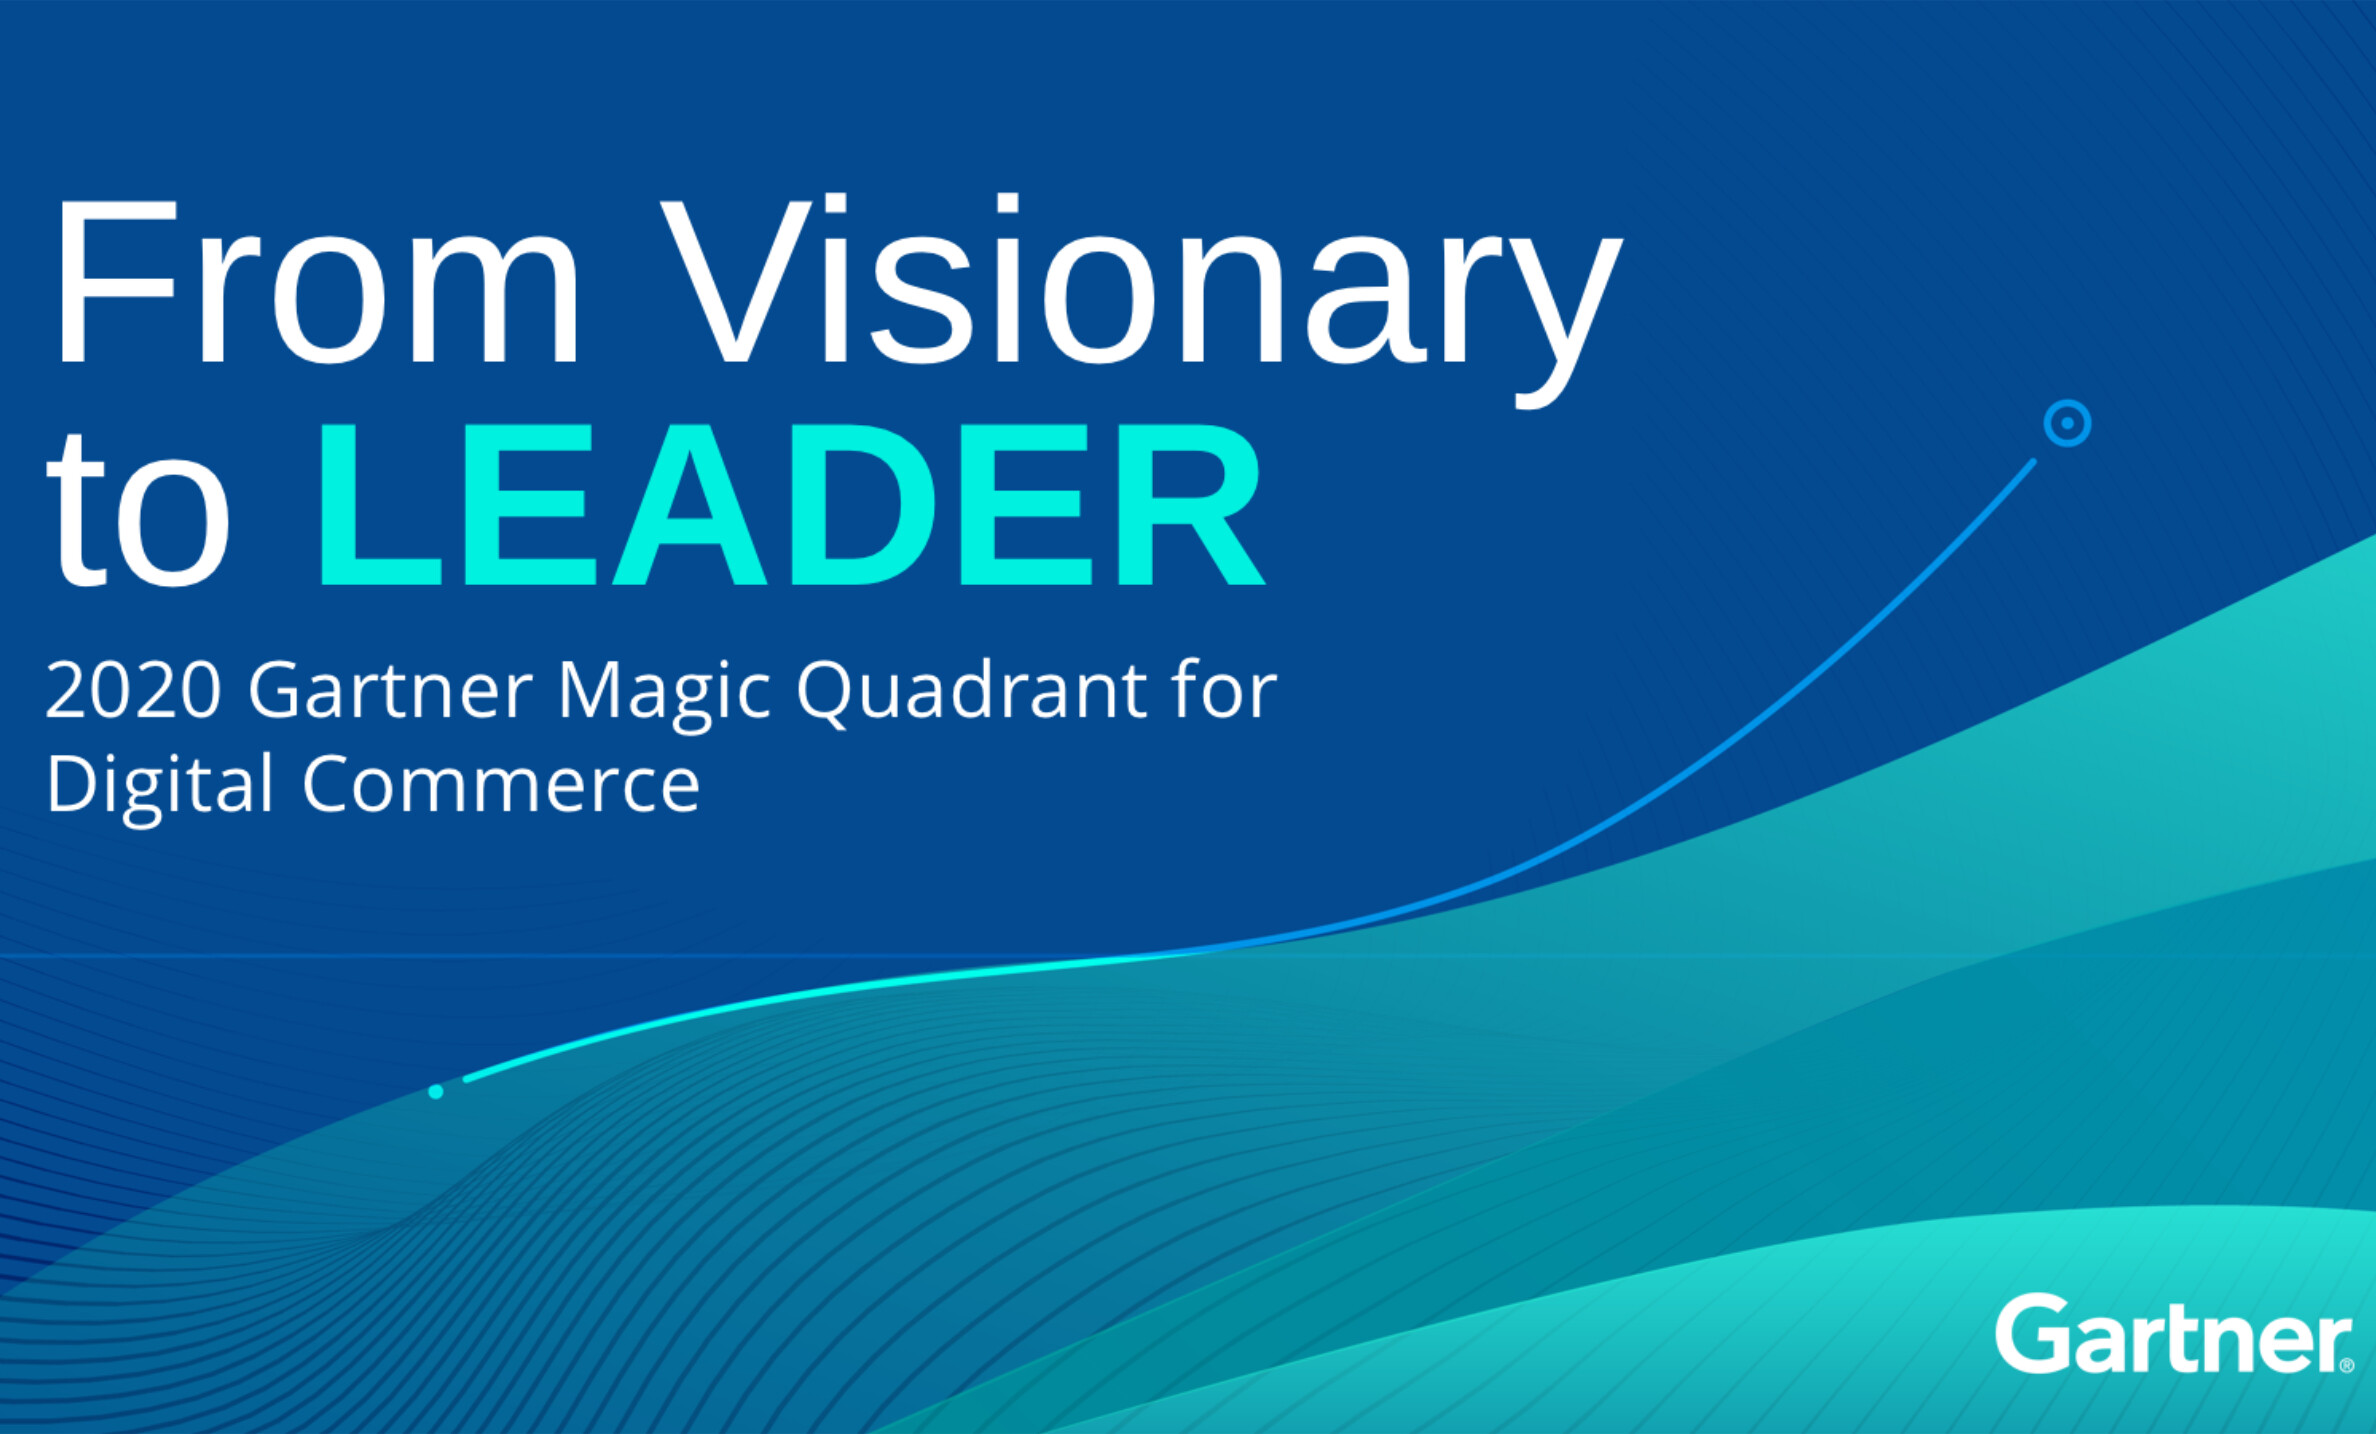 commercetools Named a Leader in 2020 Gartner Magic Quadrant